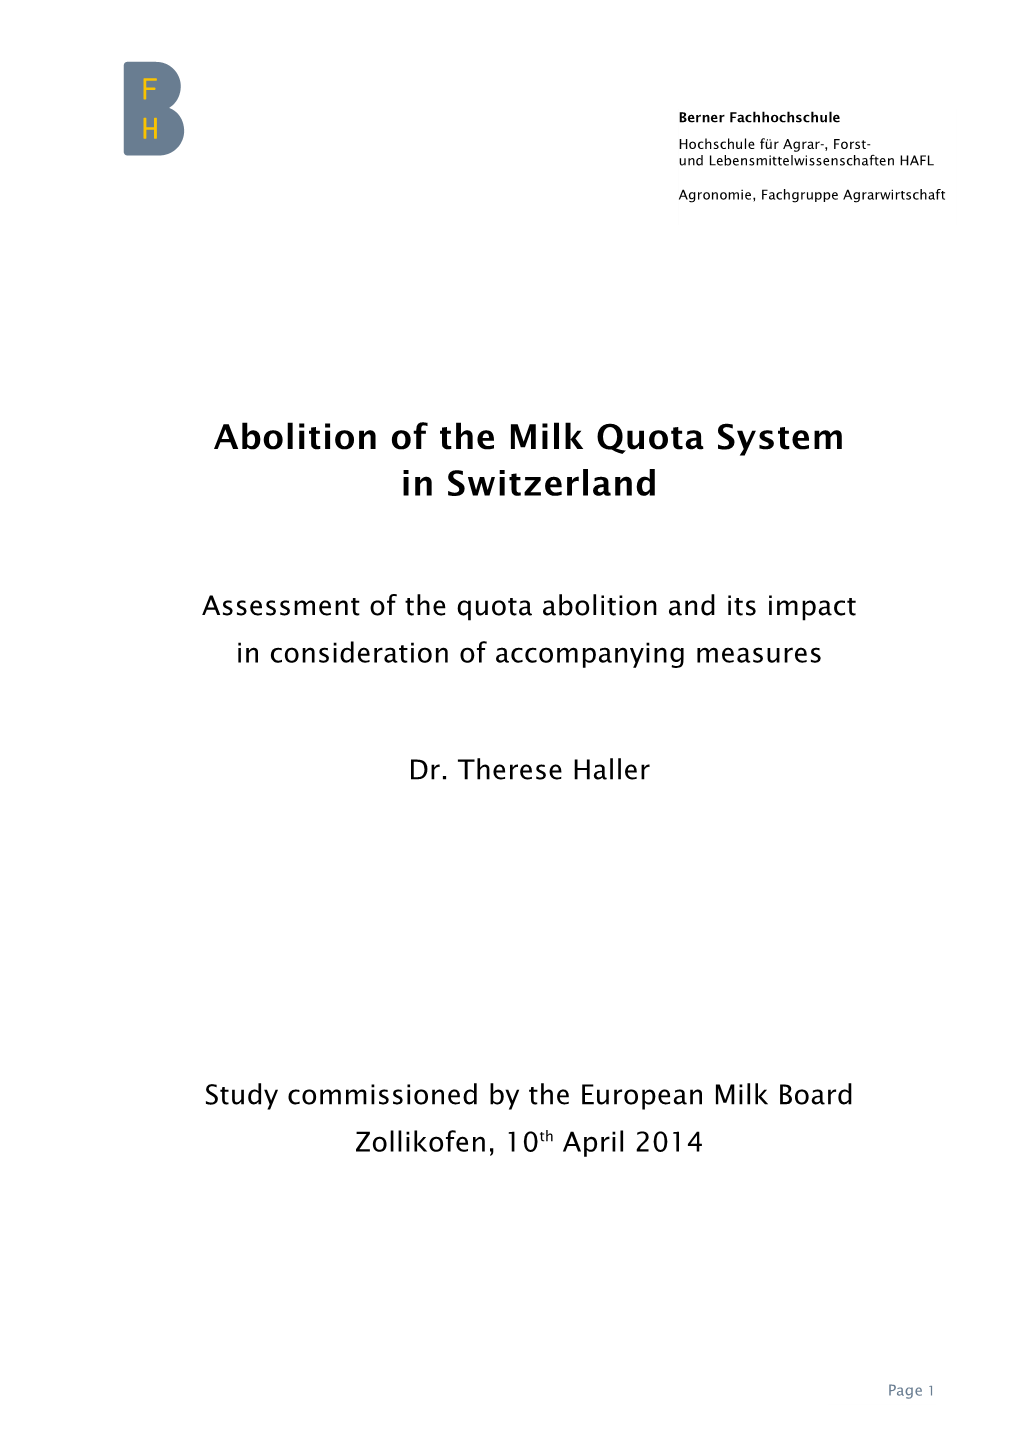 Abolition of the Milk Quota System in Switzerland